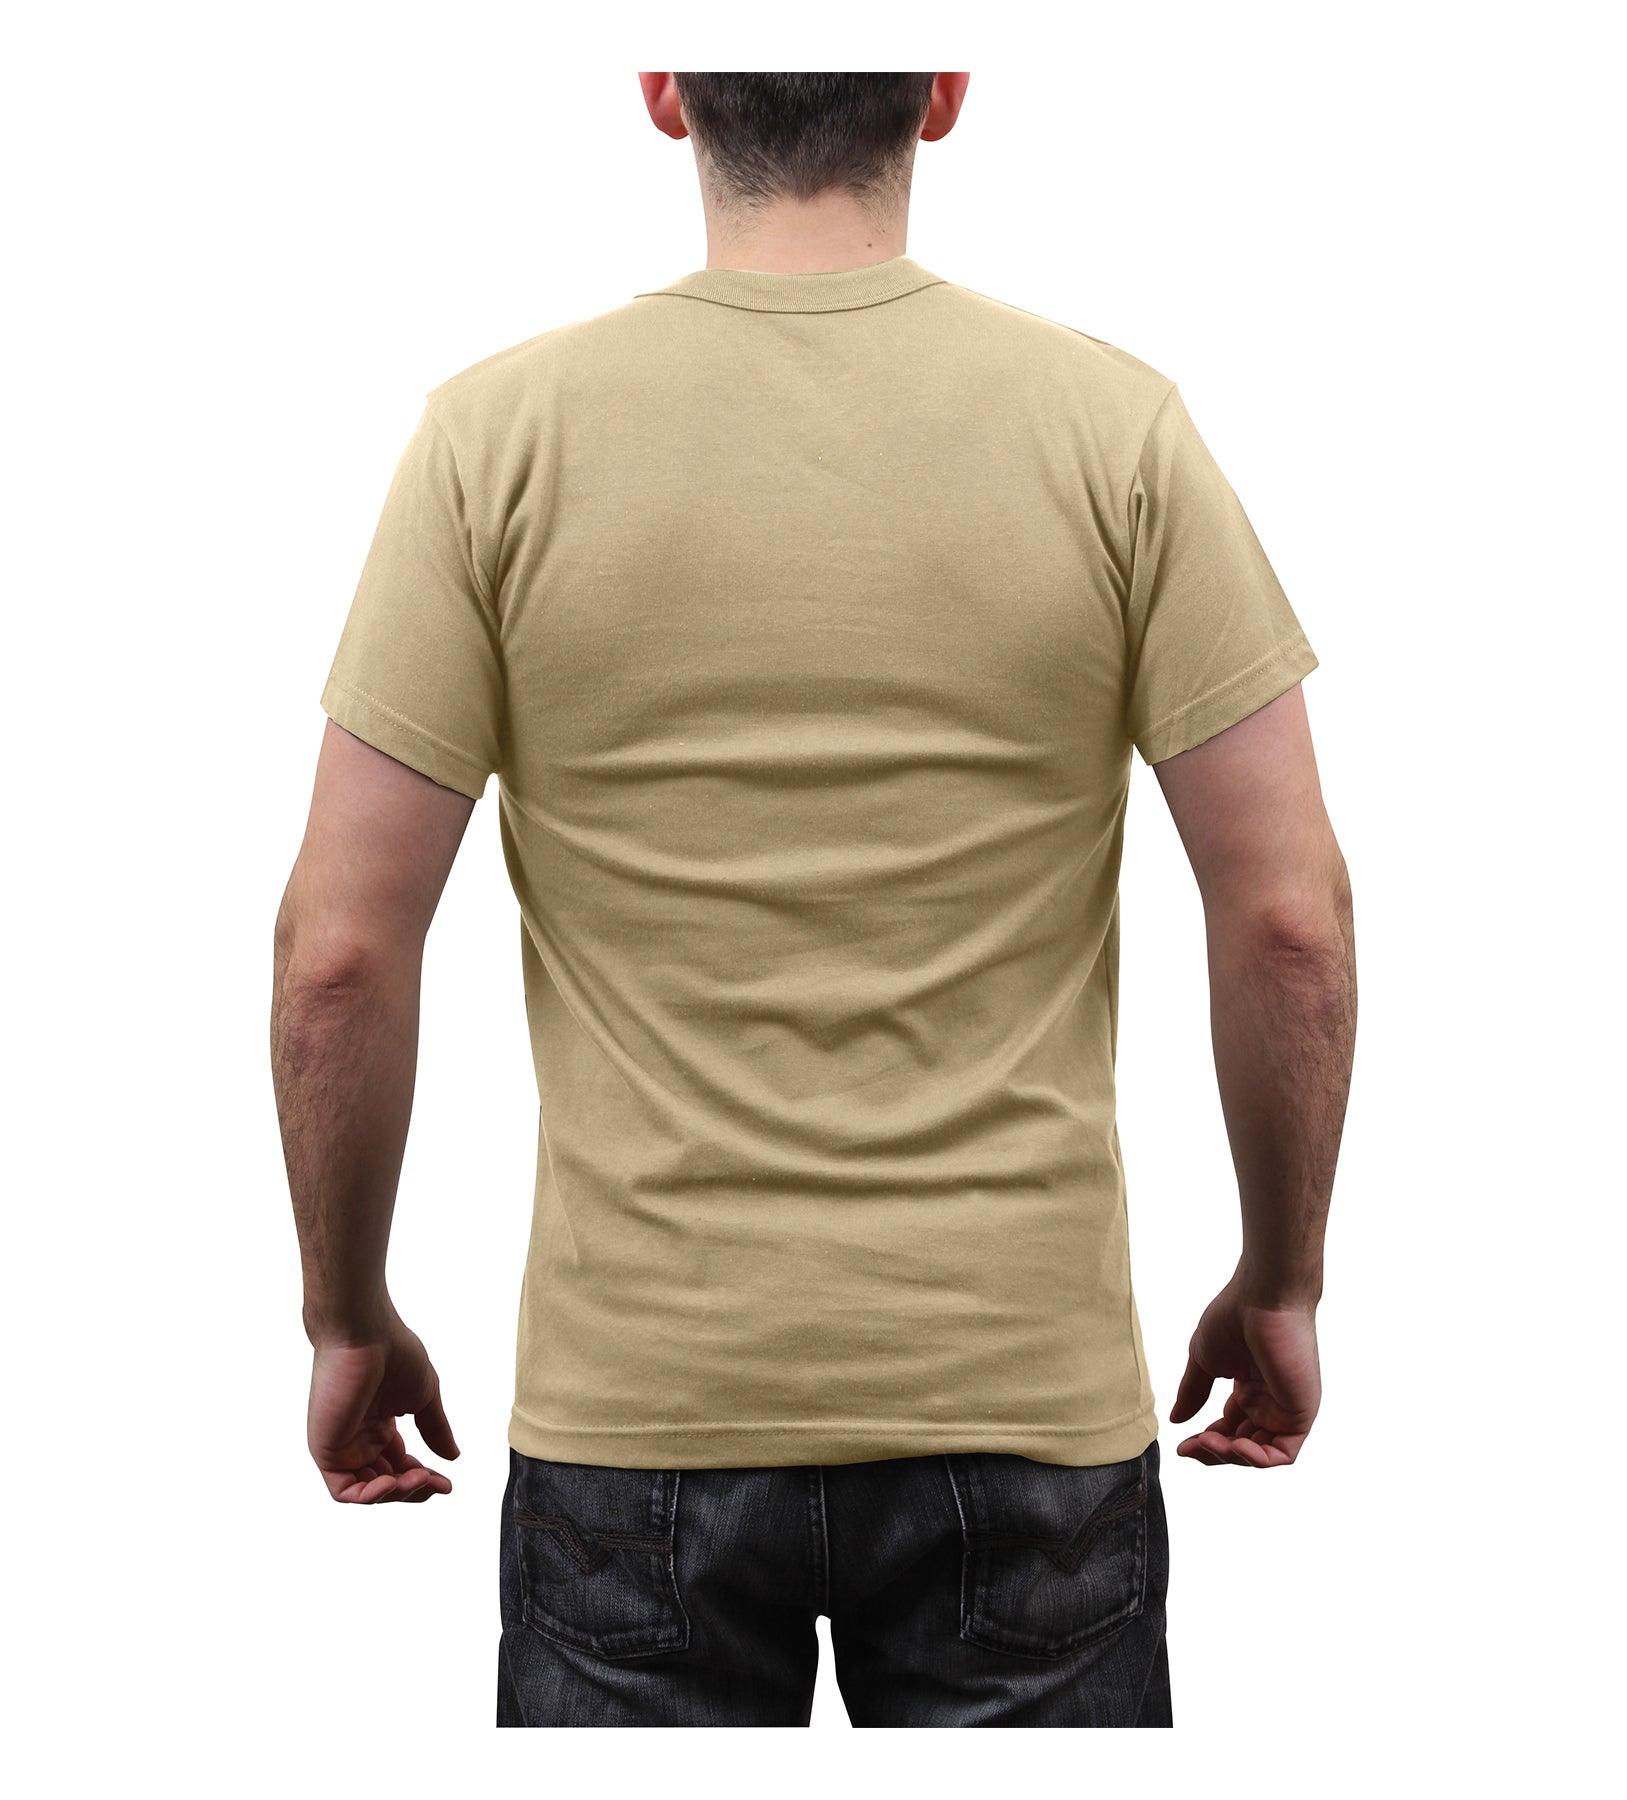 [Public Safety] Cotton Thin Blue Line T-Shirts